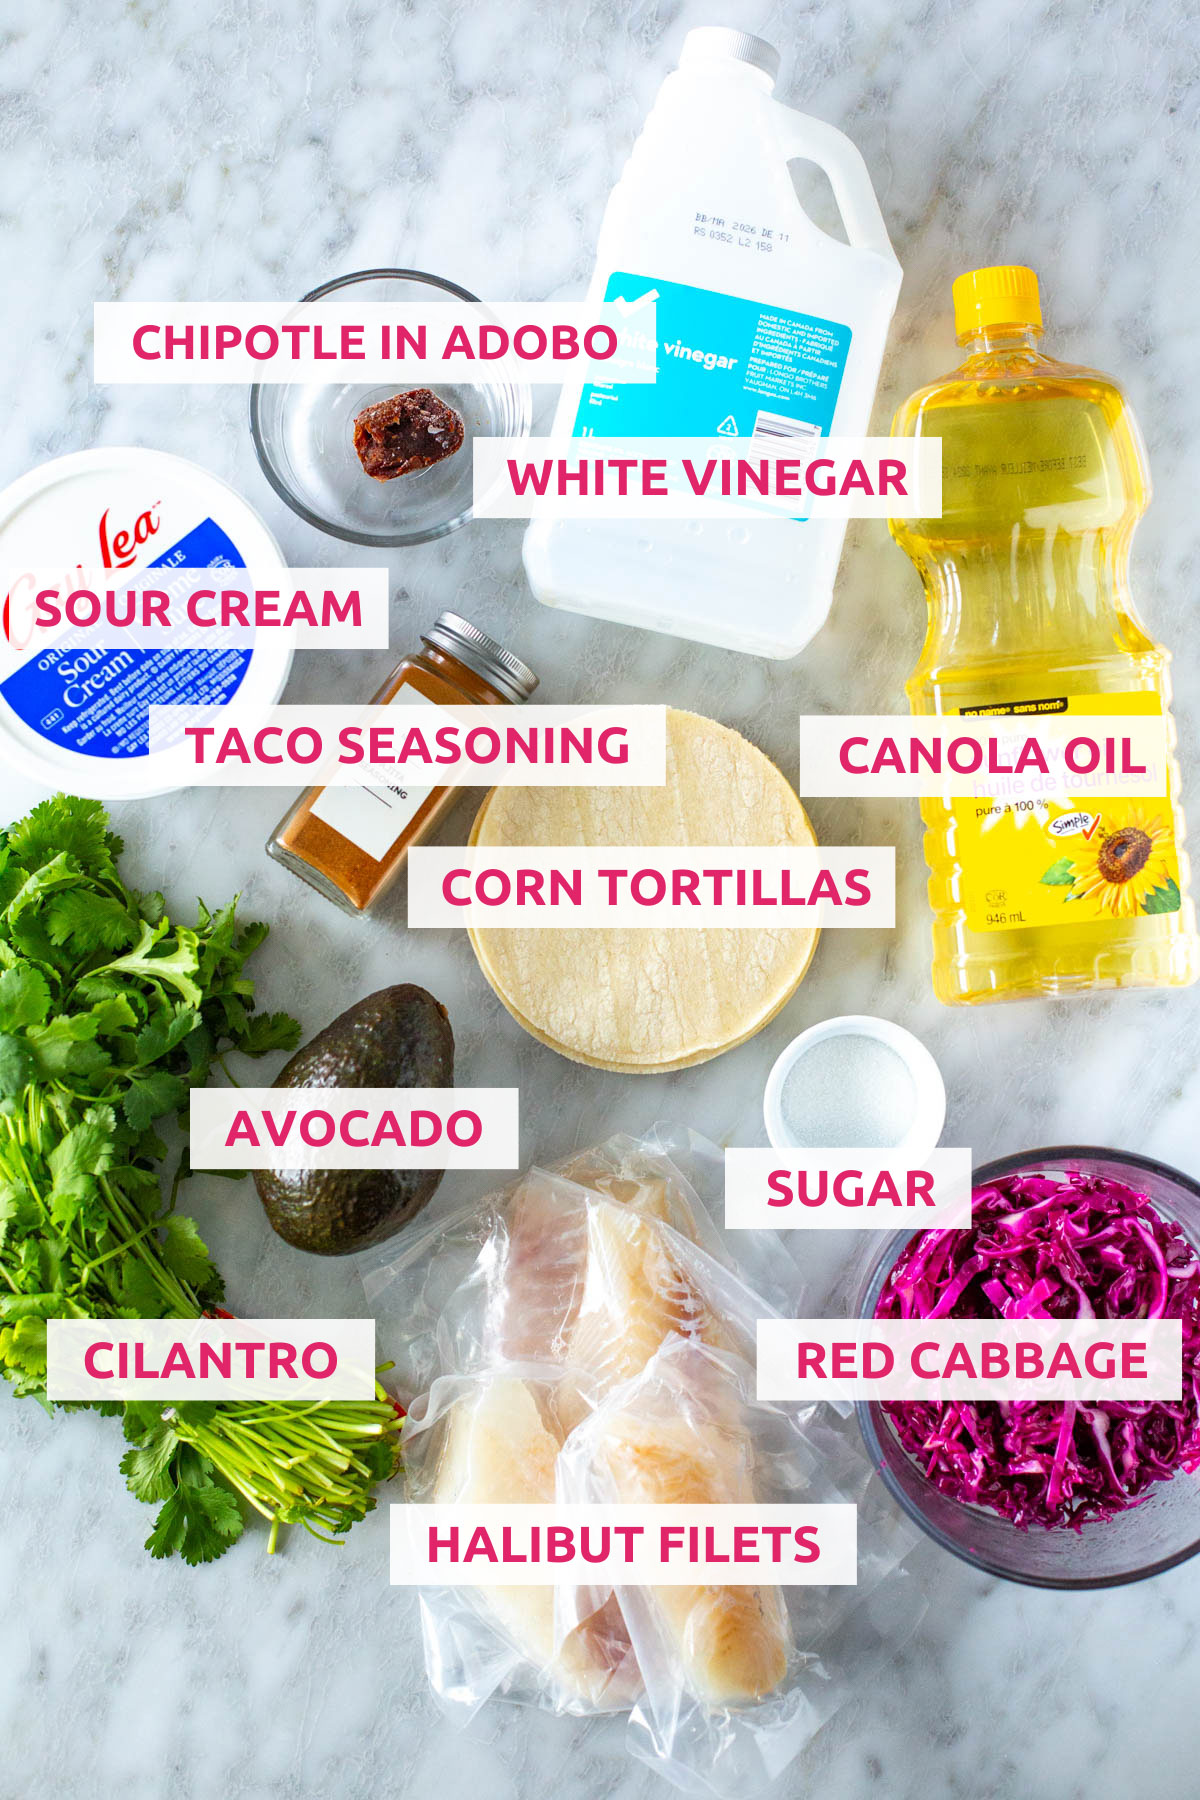 Ingredients for fish tacos: halibut filets, cilantro, avocado, red cabbage, sugar, canola oil, corn tortillas, taco seasoning, sour cream, chipotles in adobo and white vinegar.